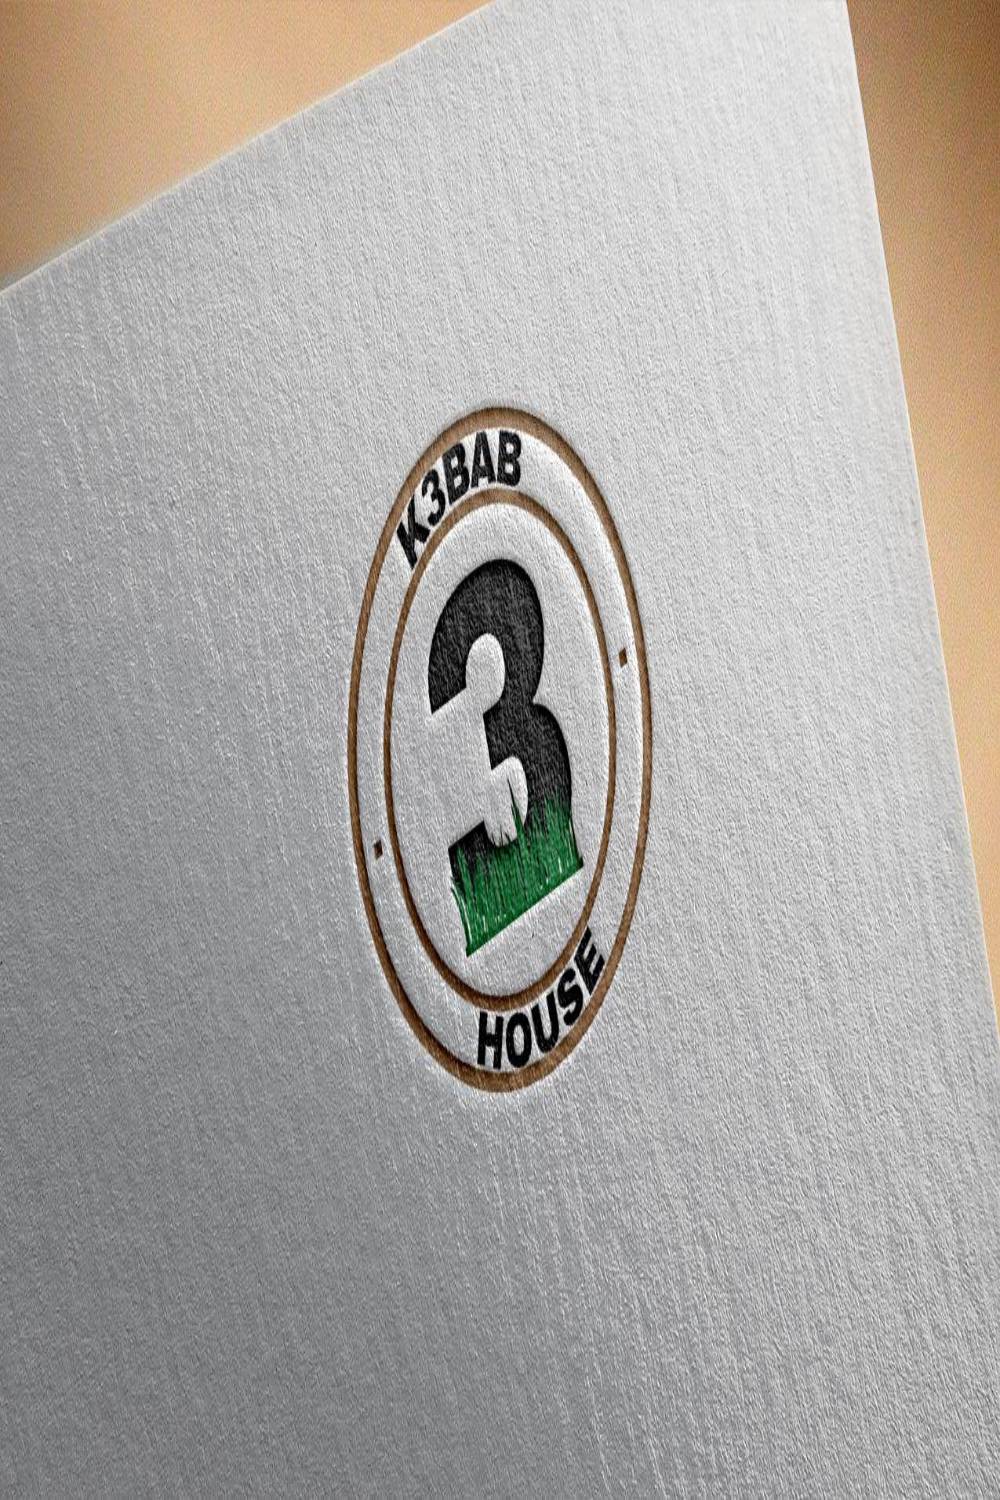 Kebab House Logo Design pinterest image.